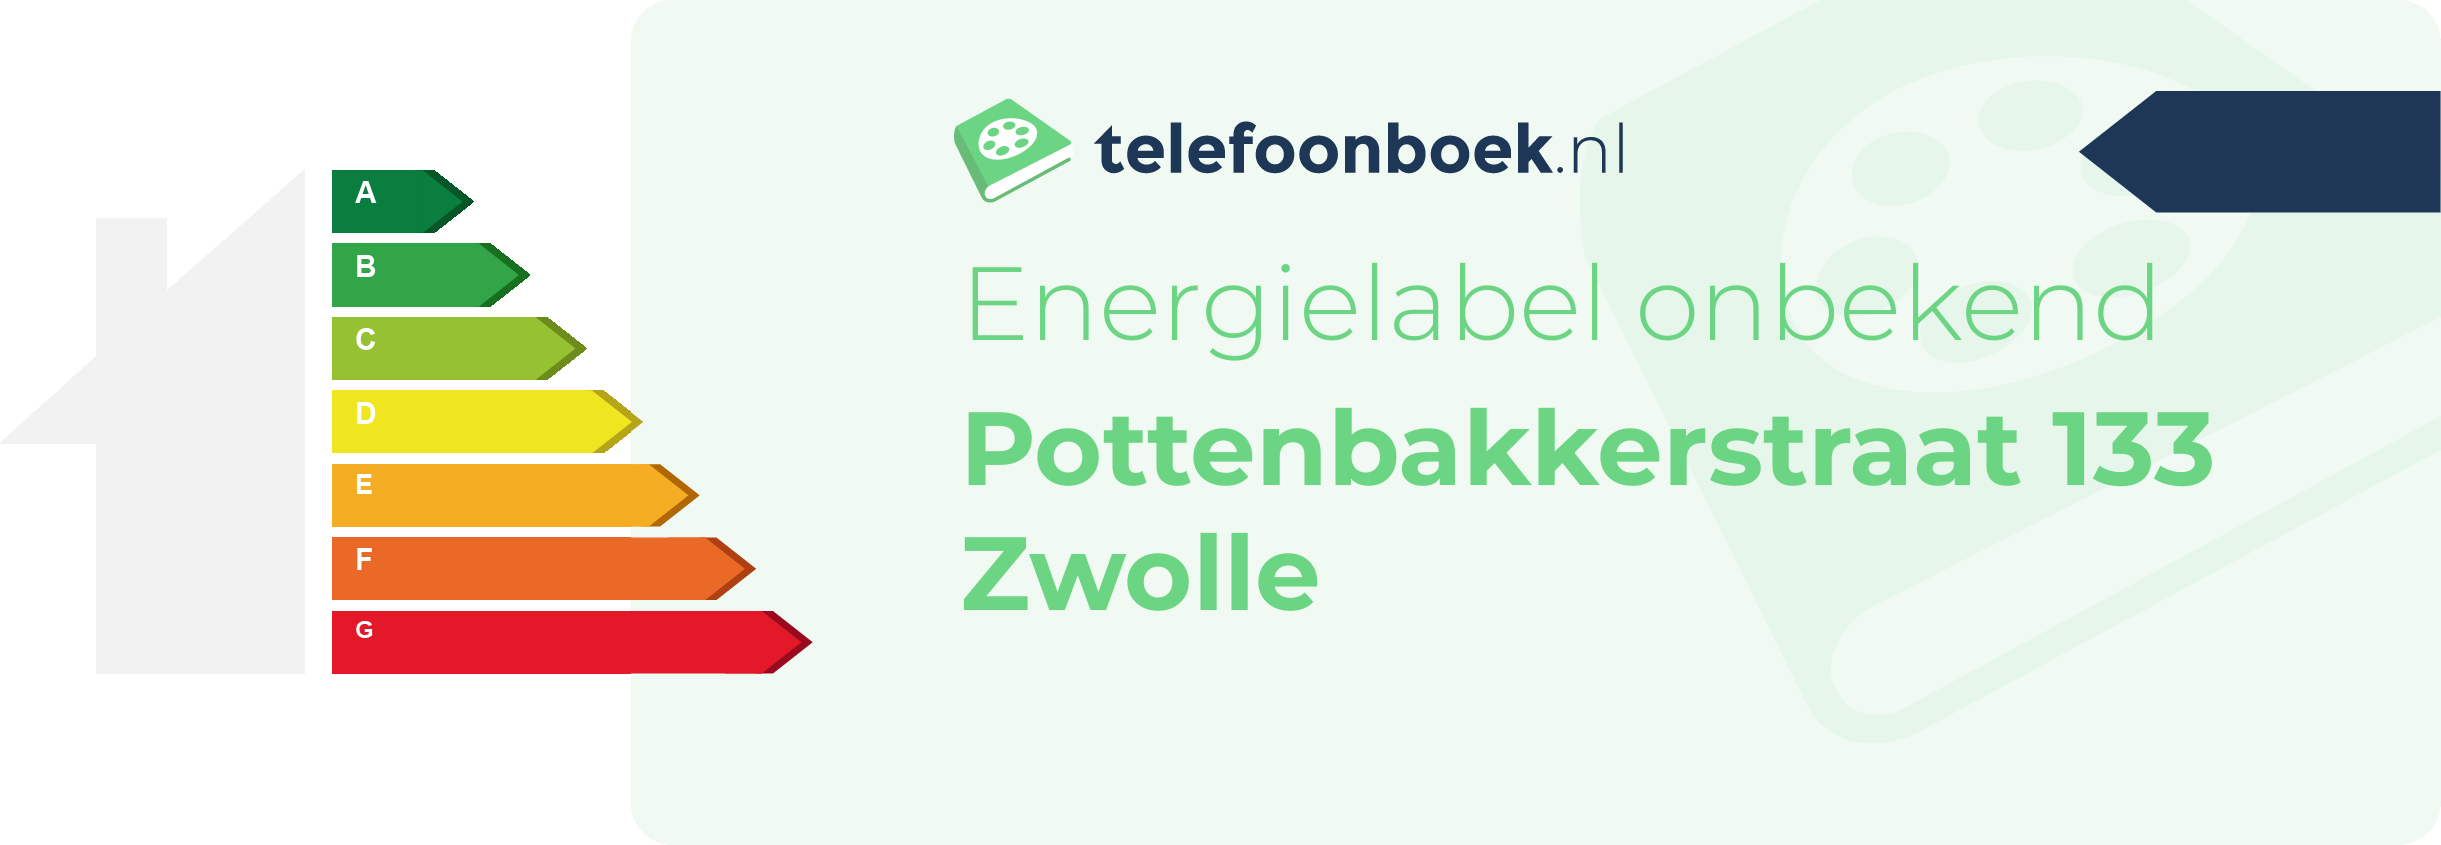 Energielabel Pottenbakkerstraat 133 Zwolle